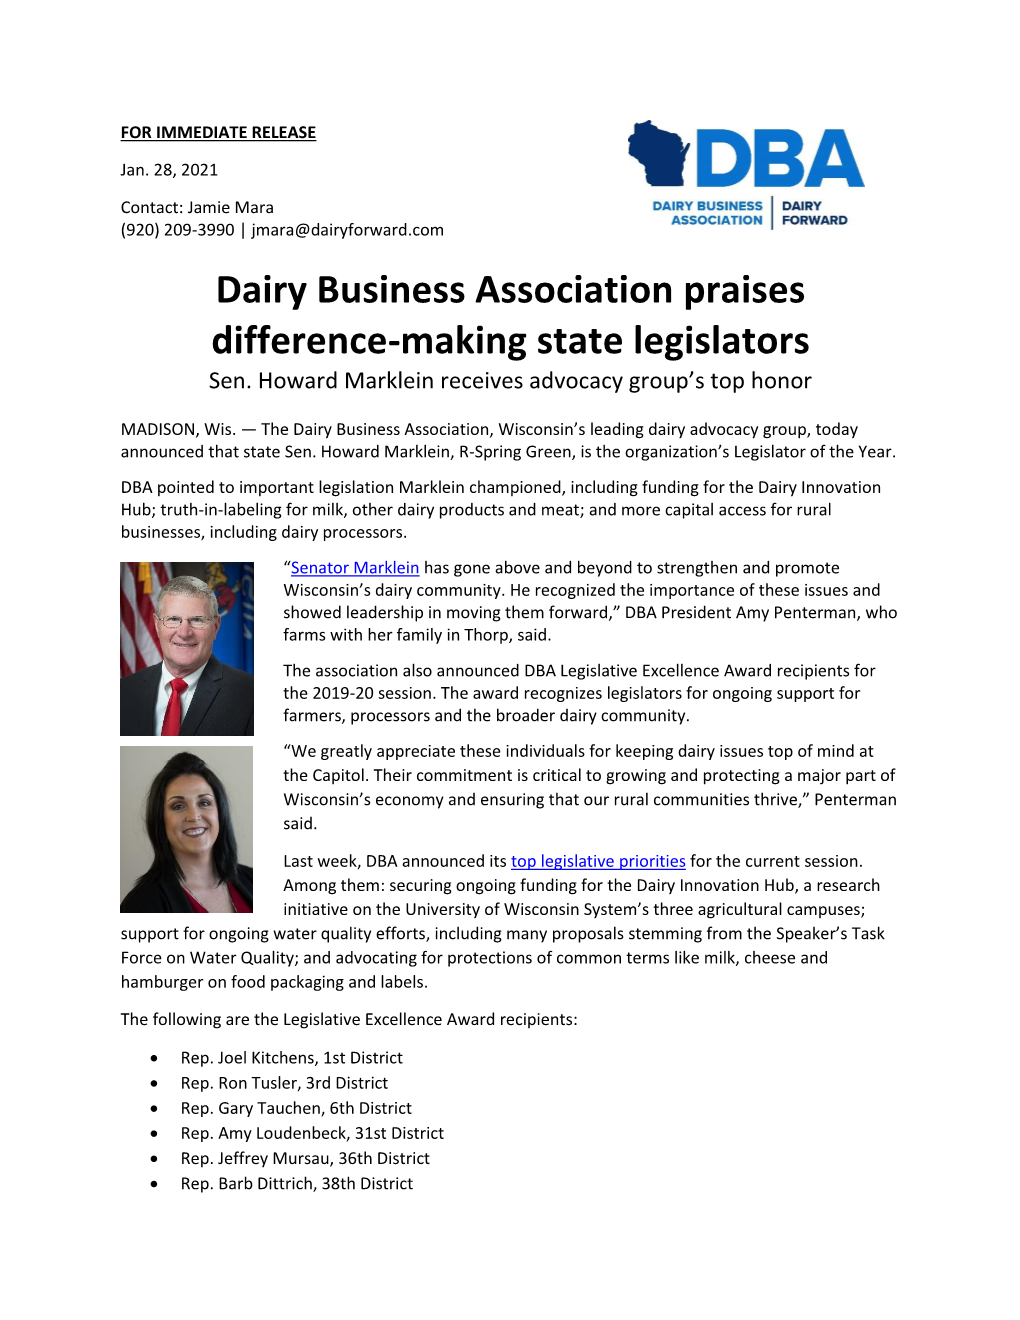 Dairy Business Association Praises Difference-Making State Legislators Sen